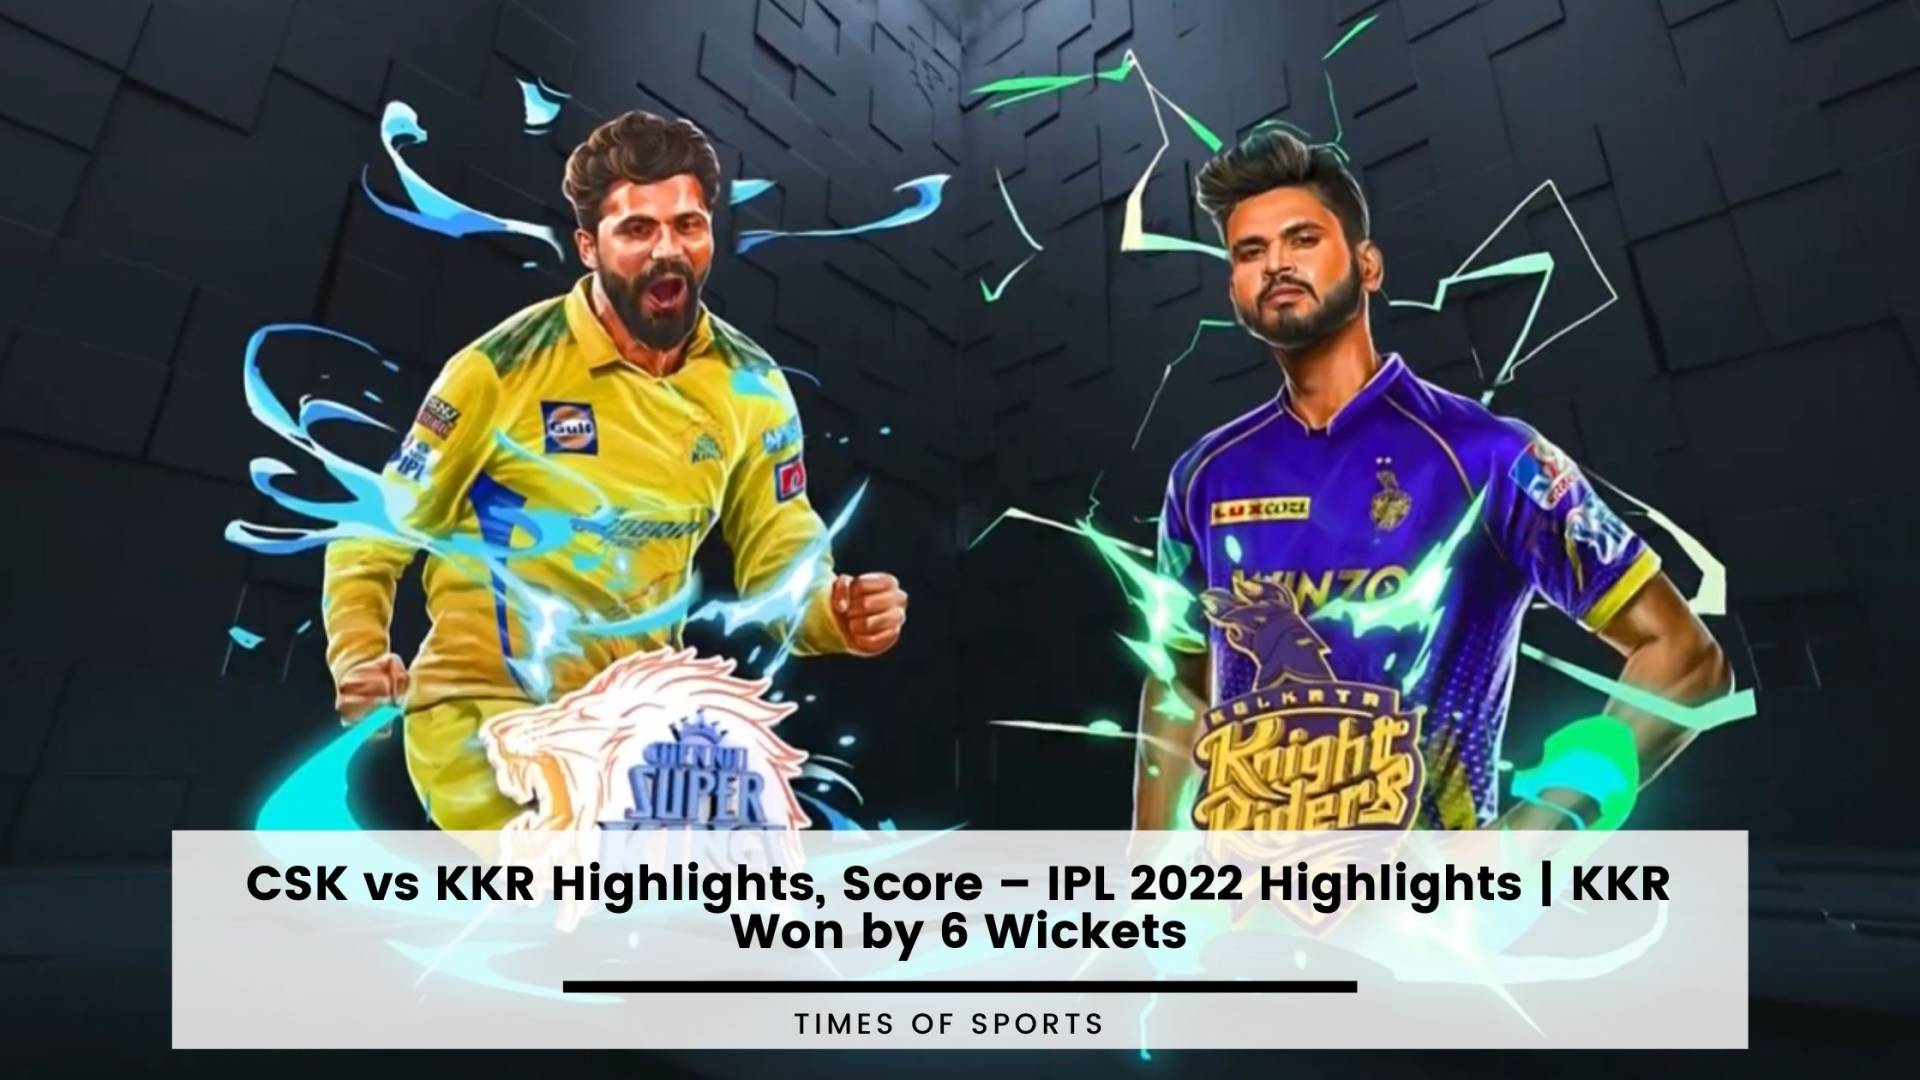 IPL 2022 CSK vs KKR Highlights, Score IPL 2022 Highlights KKR Won